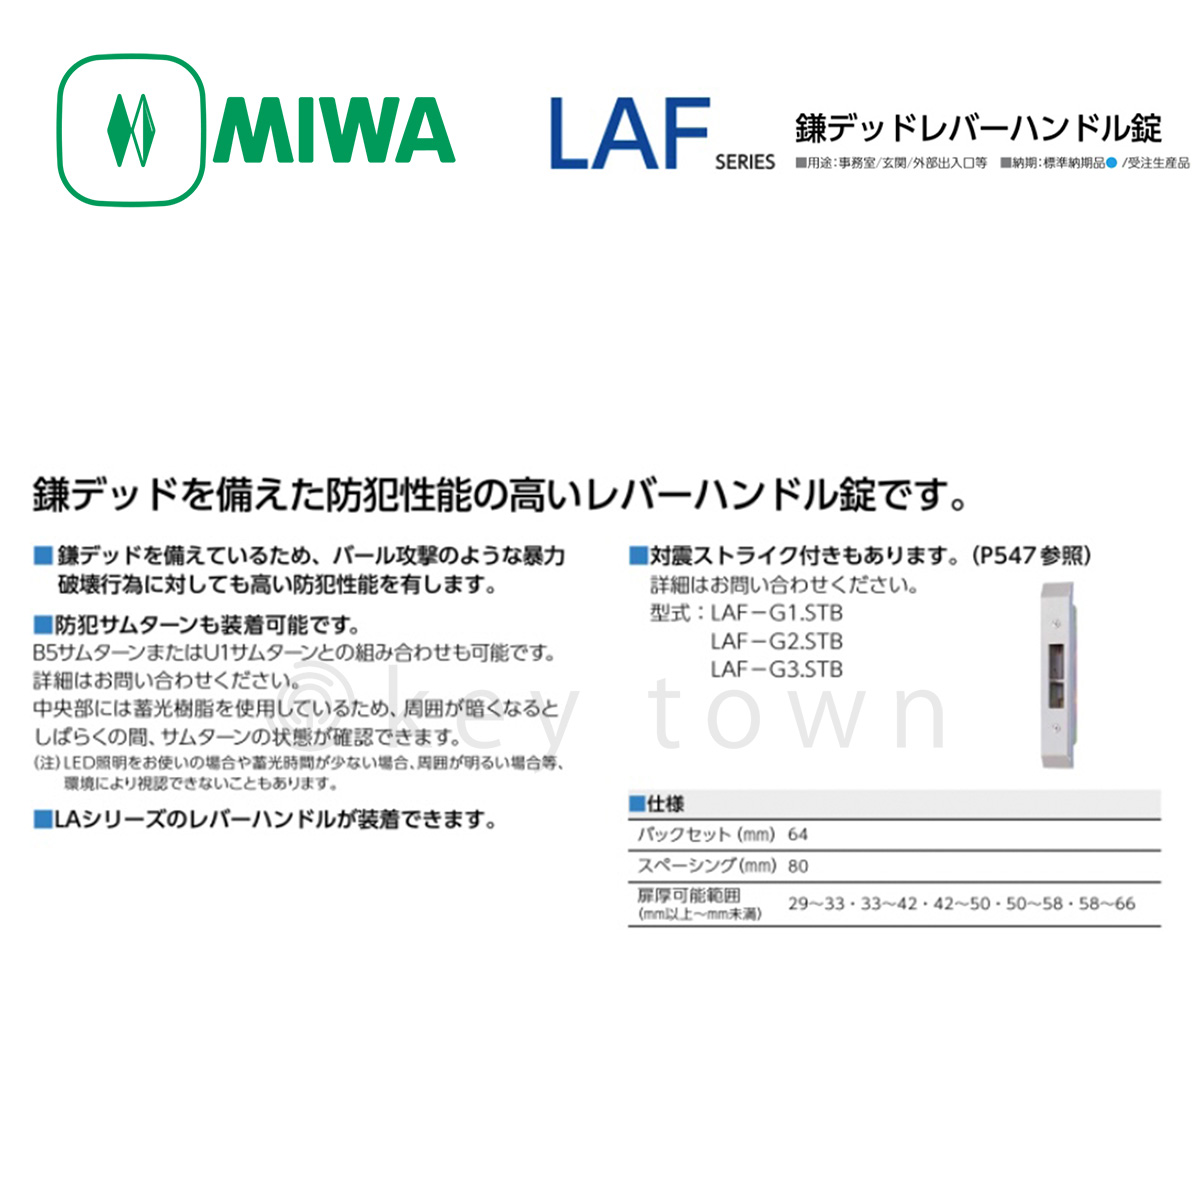 MIWA 【美和ロック】 レバーハンドル [MIWA-LAF] U9LAF33-1[MIWALAF